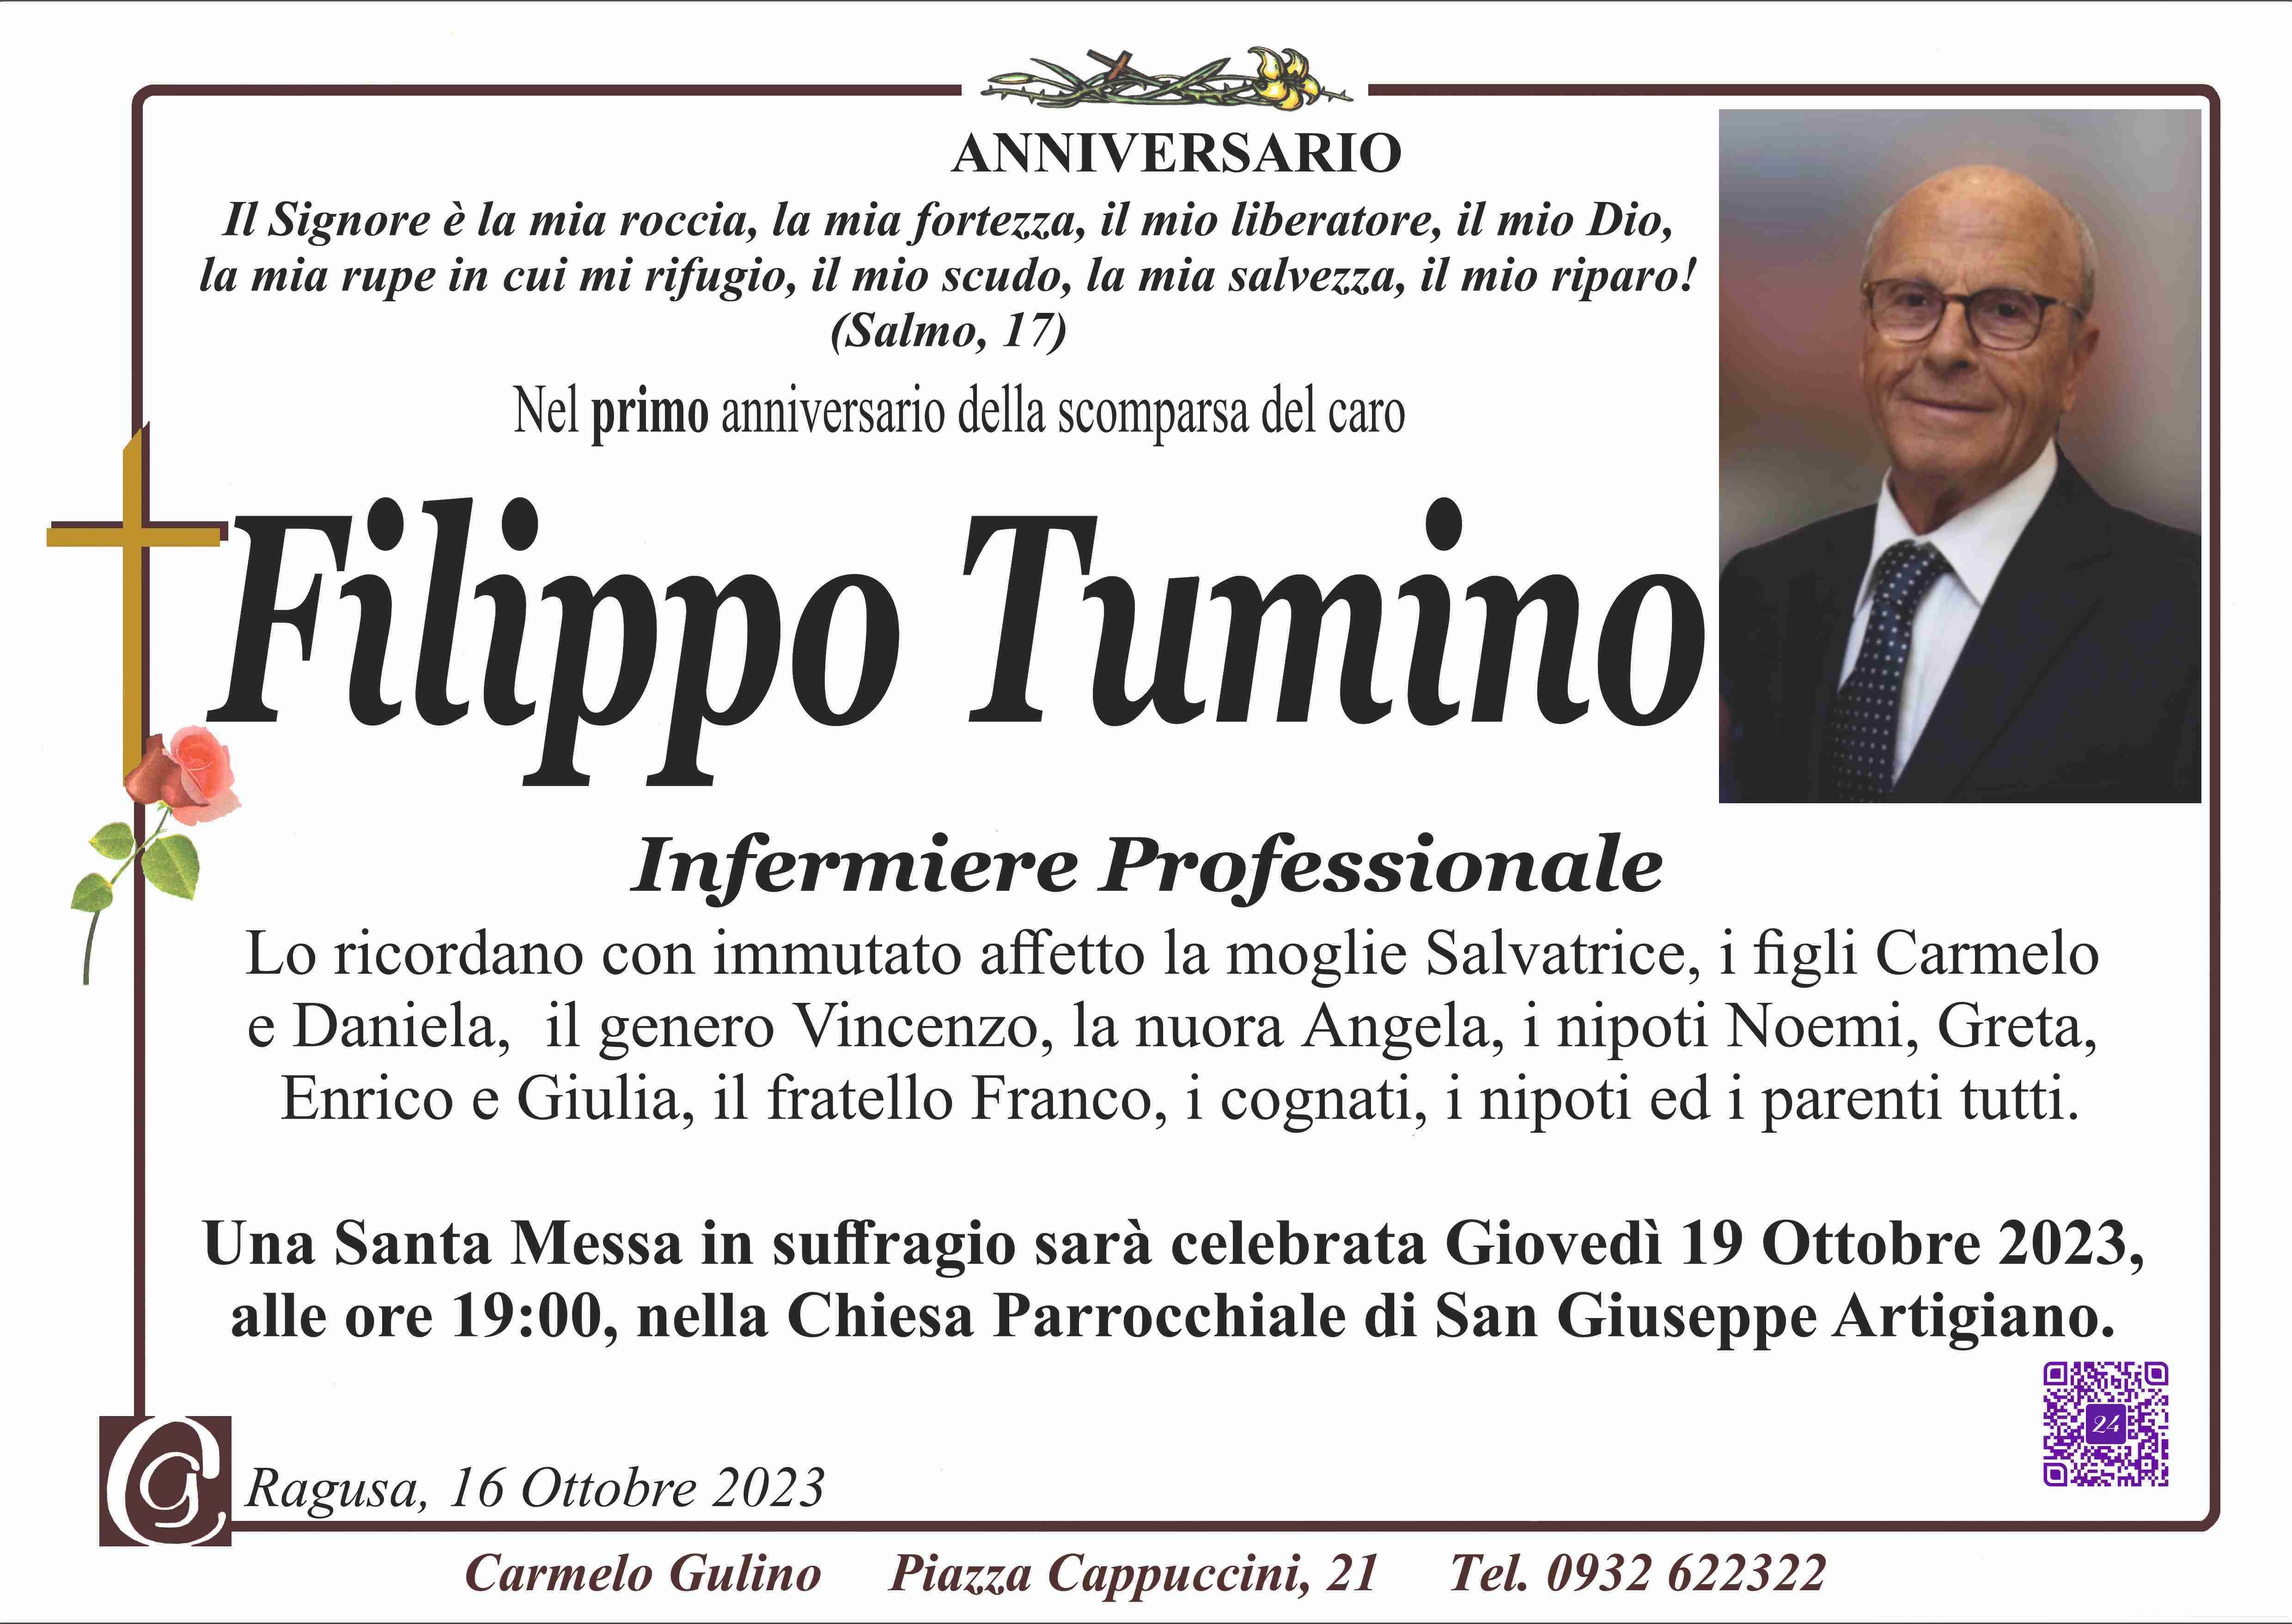 Filippo Tumino